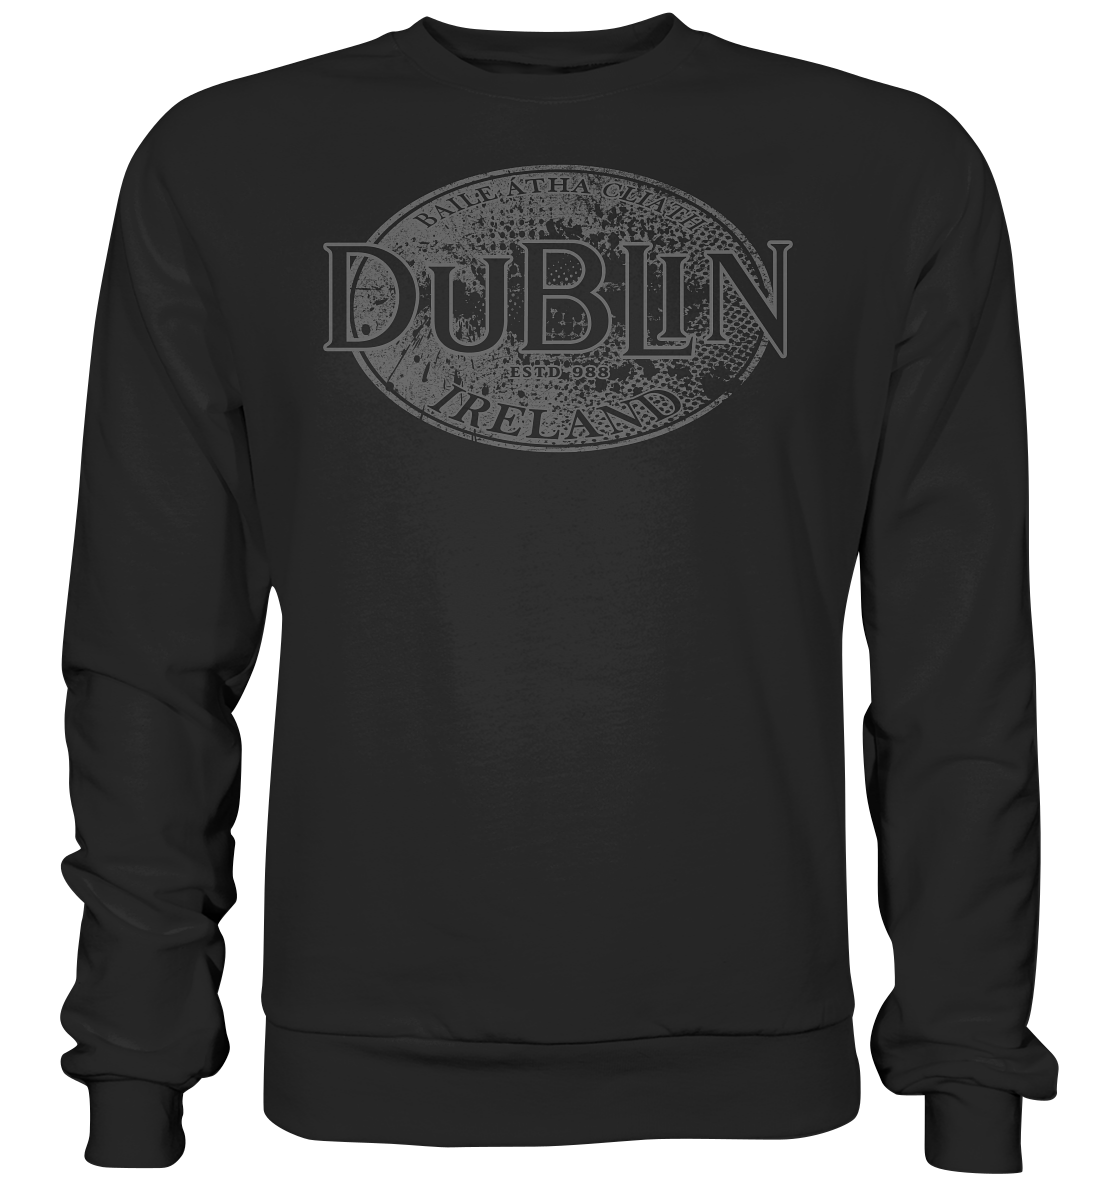 Dublin "Ireland / Baile Átha Cliath / Estd 988" - Premium Sweatshirt